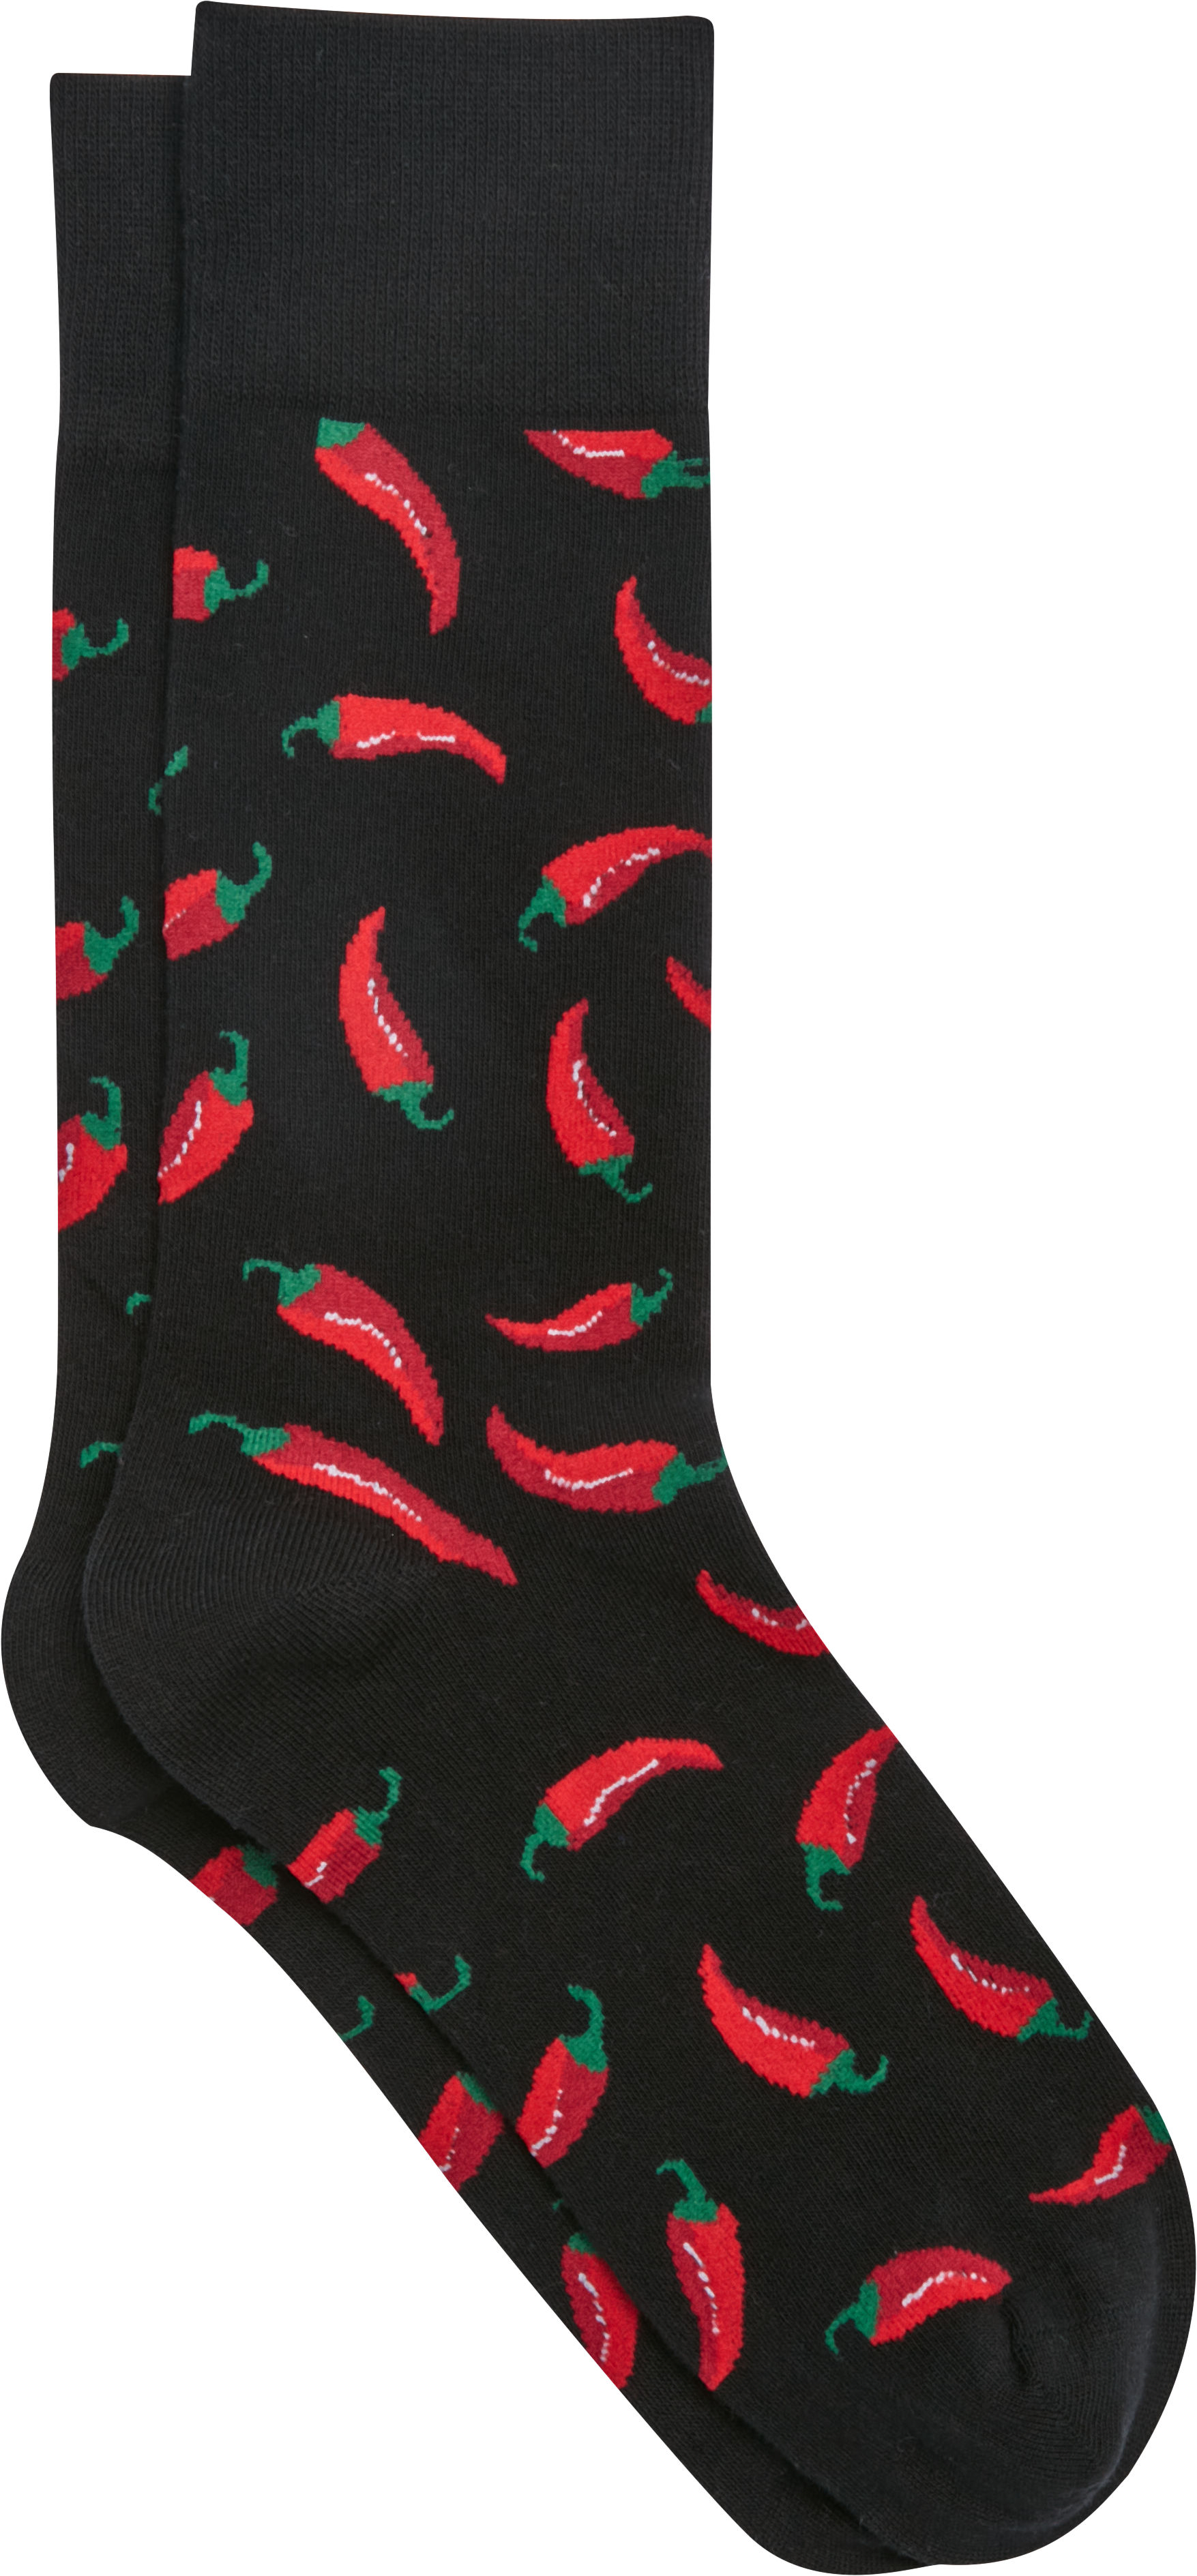 Hot Chili Socks